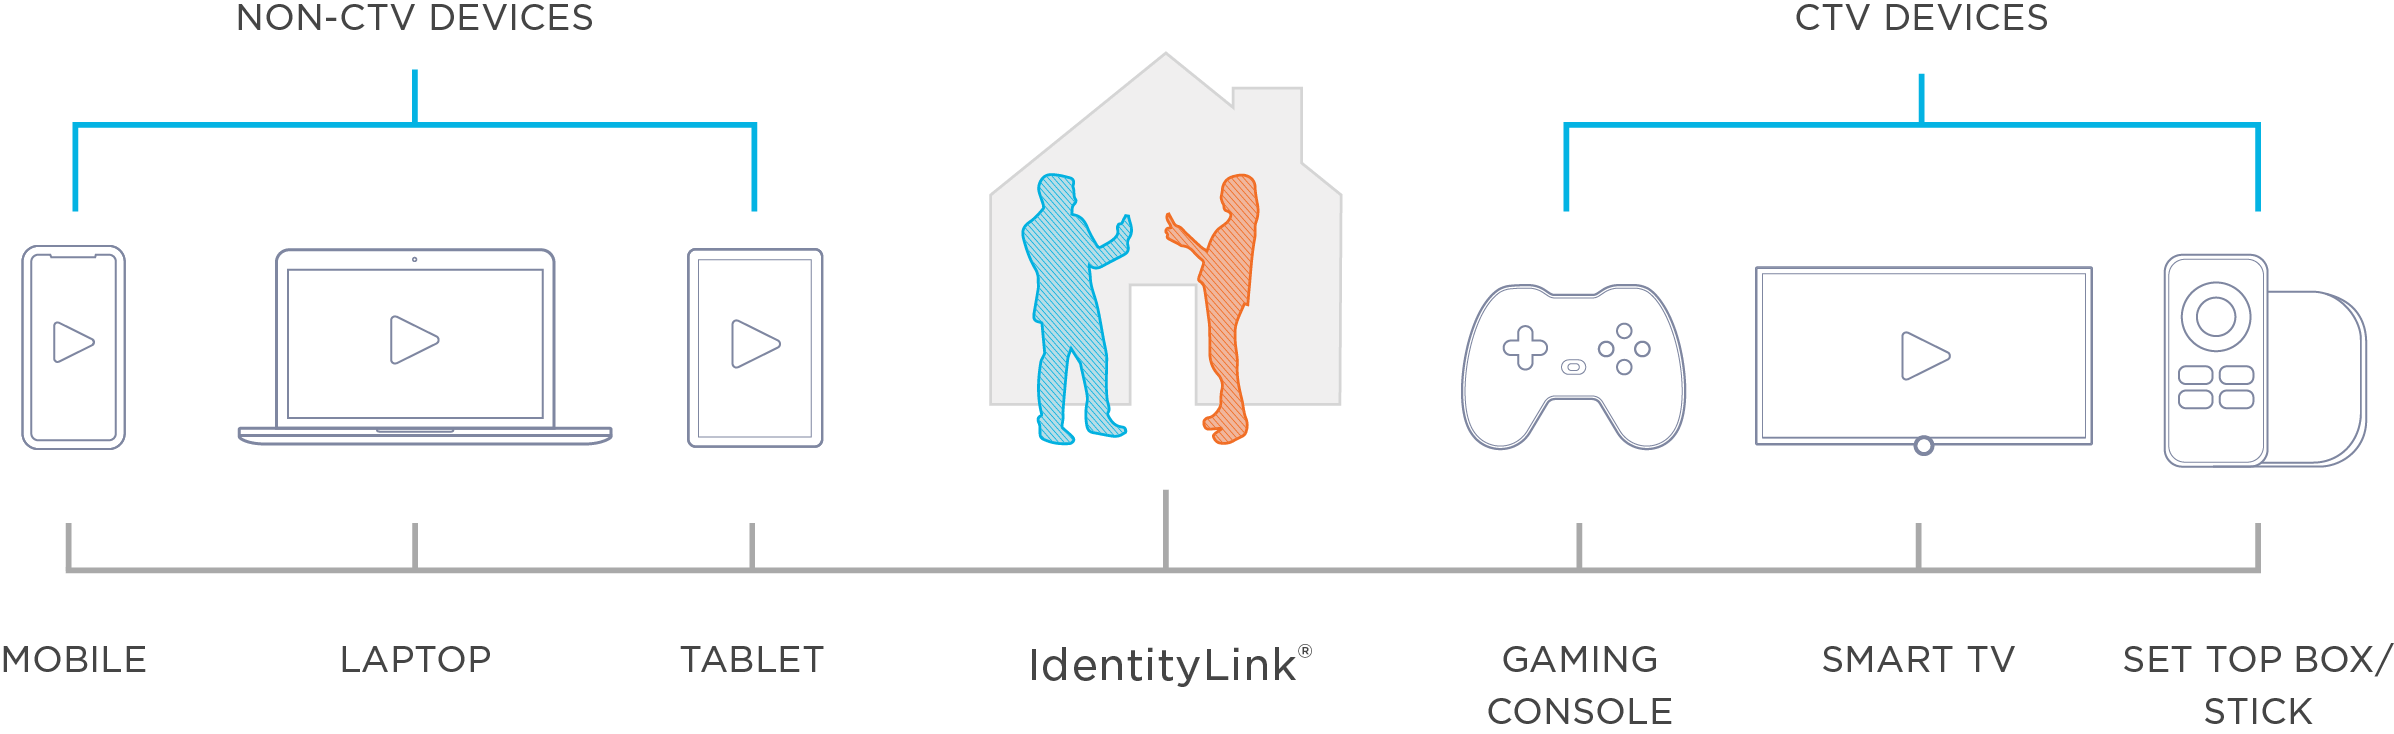 Kochava IdentityLink devices and households